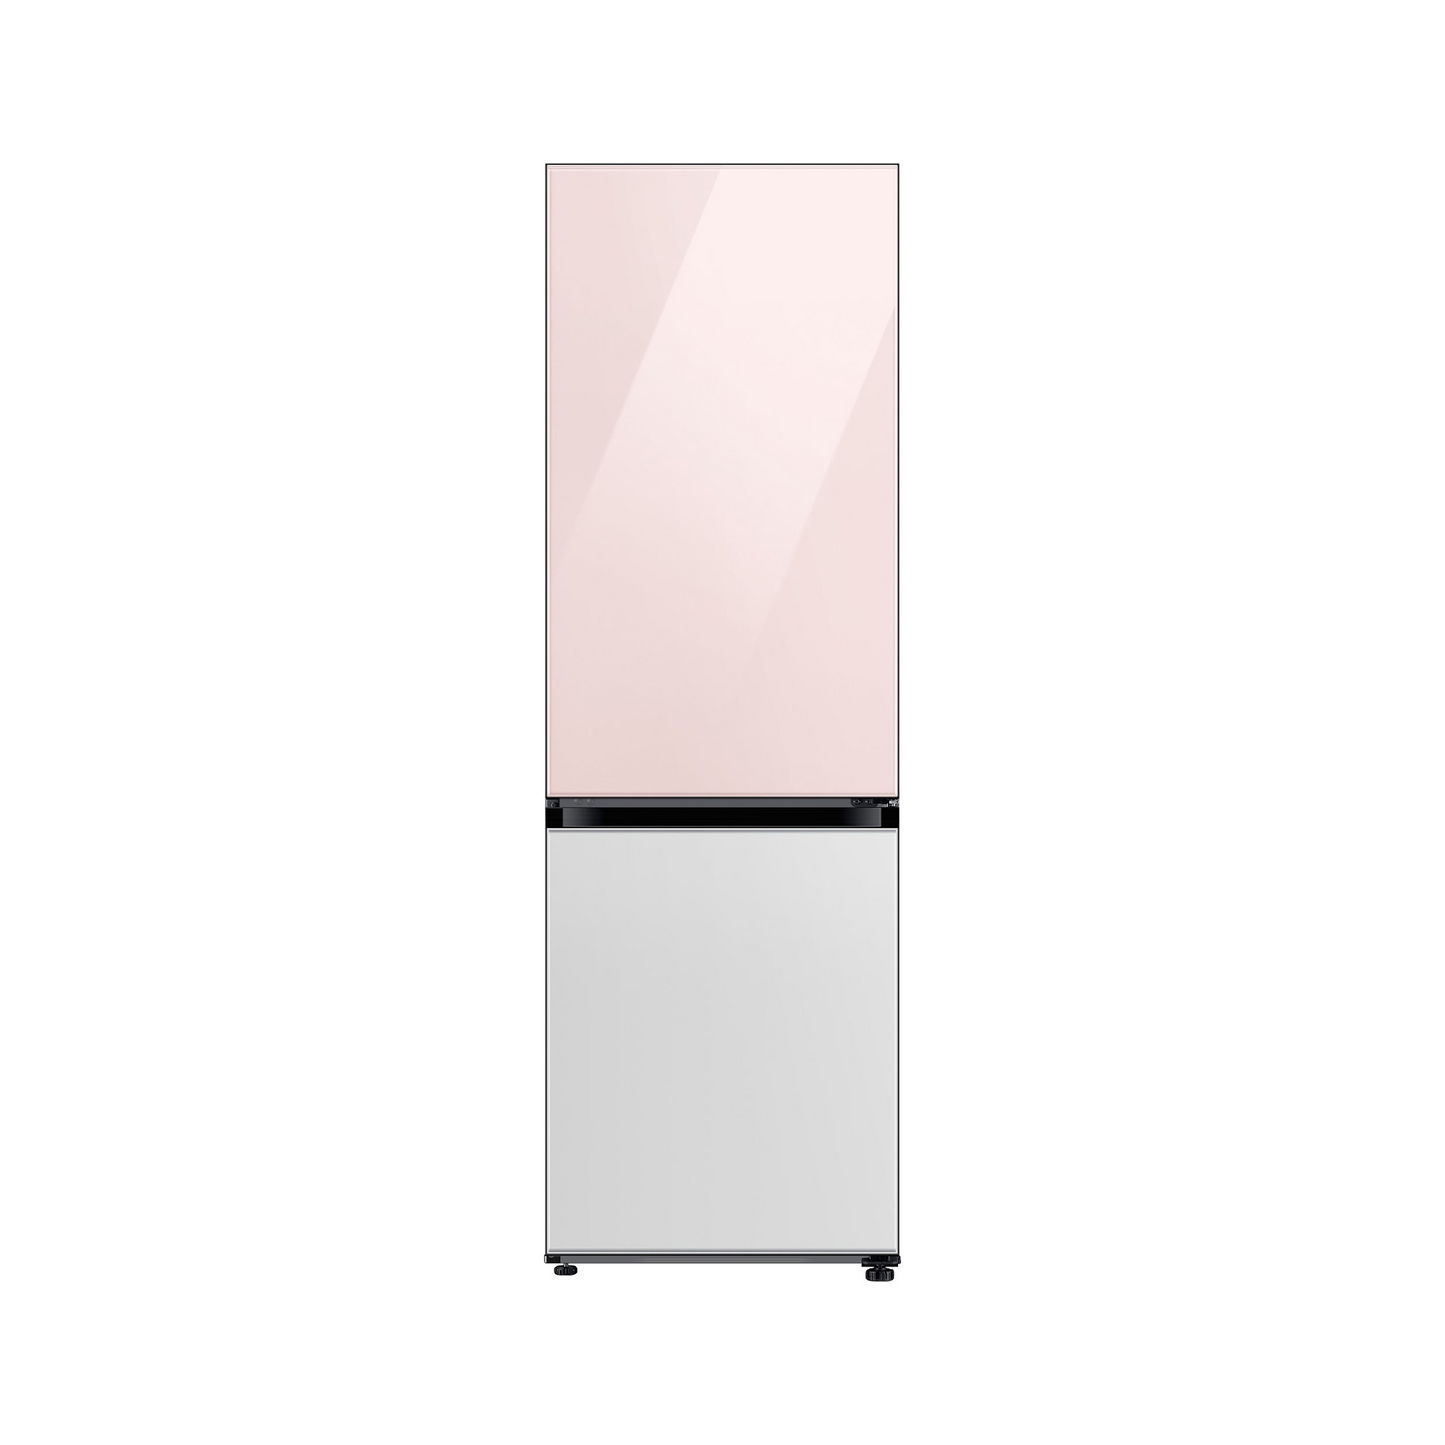 Refrigerador Smart BMF Bespoke 328 L Clean White/Pink2#Blanco|Rosado